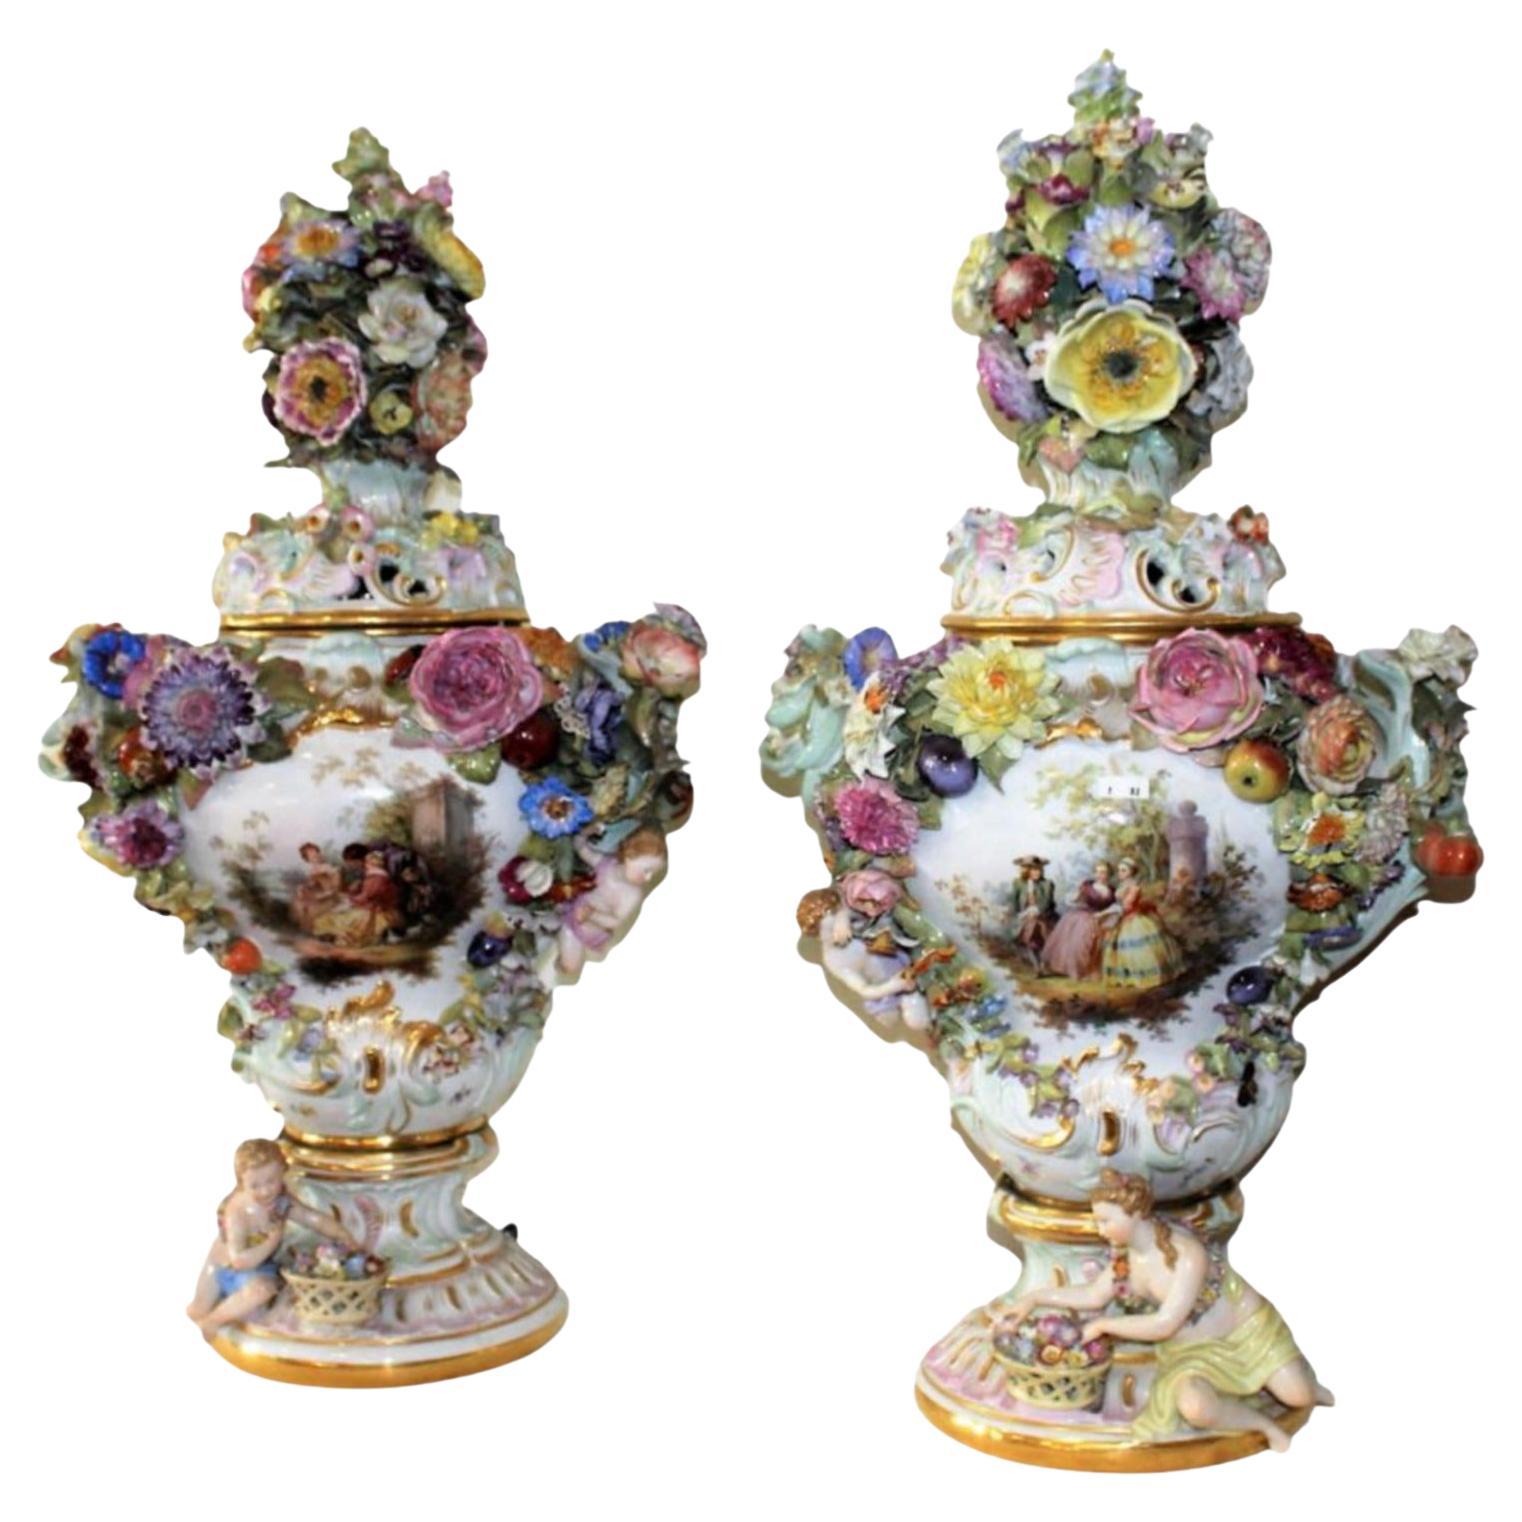 Imposing Pair of Amphora in German Meissen Porcelain, 18th Century